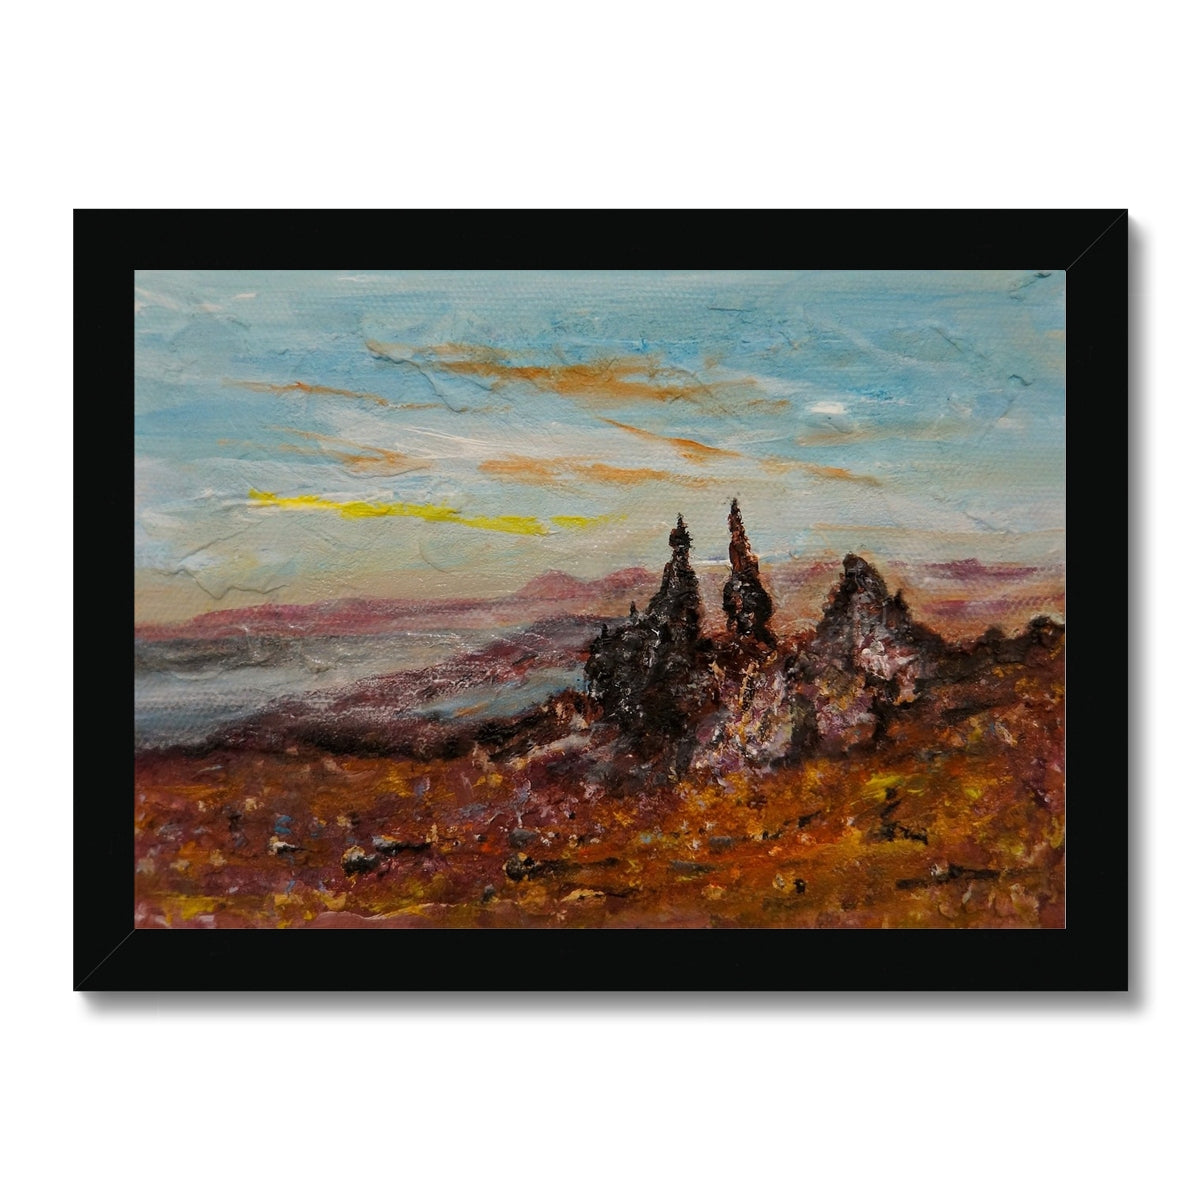 The Storr Skye Painting | Framed Prints From Scotland-Framed Prints-Skye Art Gallery-A4 Landscape-Black Frame-Paintings, Prints, Homeware, Art Gifts From Scotland By Scottish Artist Kevin Hunter